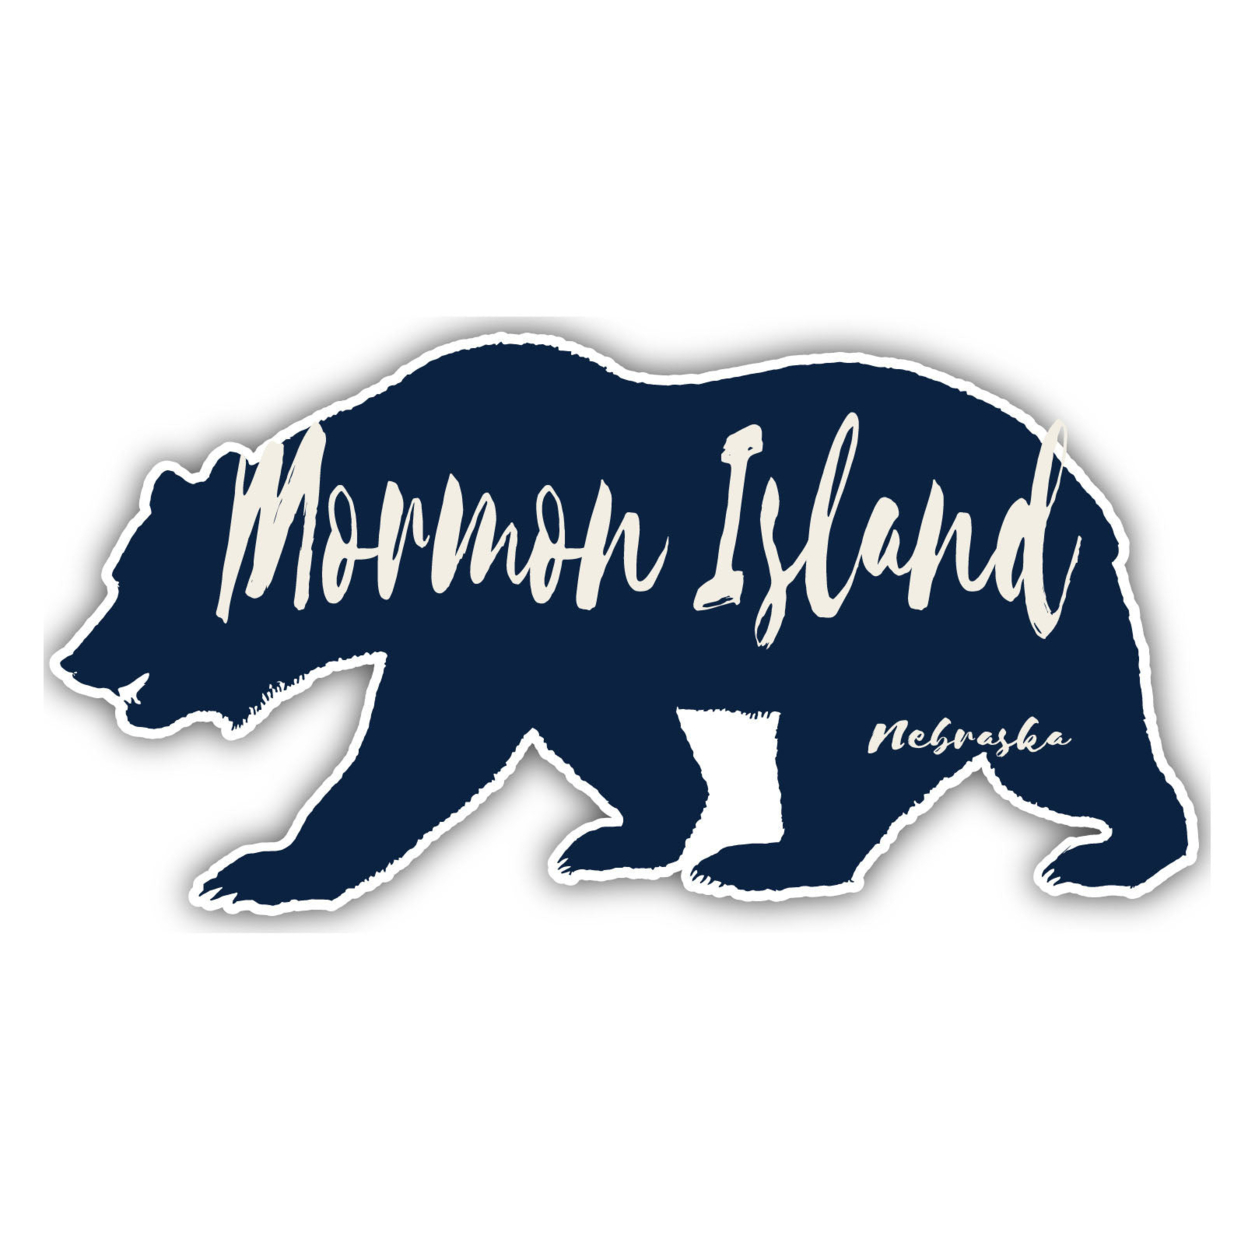 Mormon Island Nebraska Souvenir Decorative Stickers (Choose Theme And Size) - Single Unit, 4-Inch, Bear